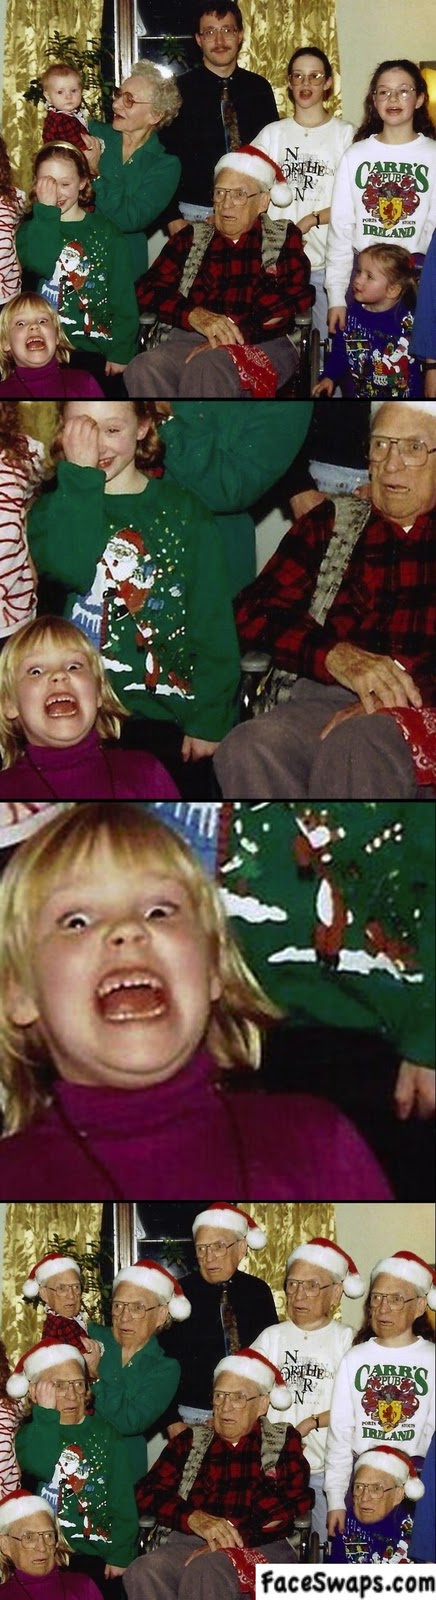 face swap, photoshop, lol, family, christmas